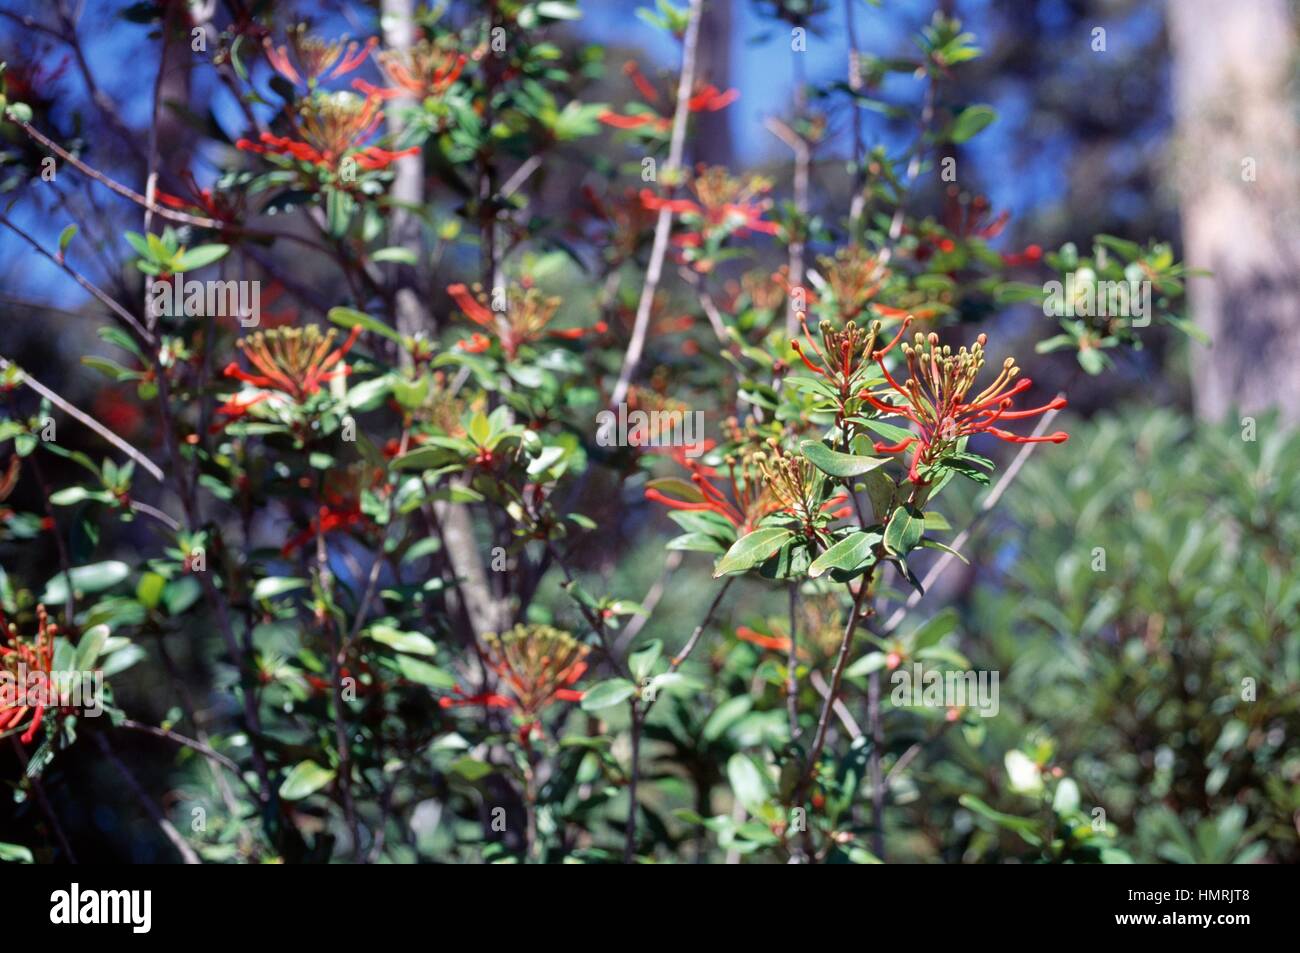 Chilean firetree or Chilean firebush (Embothrium coccineum), Proteaceae. Stock Photo